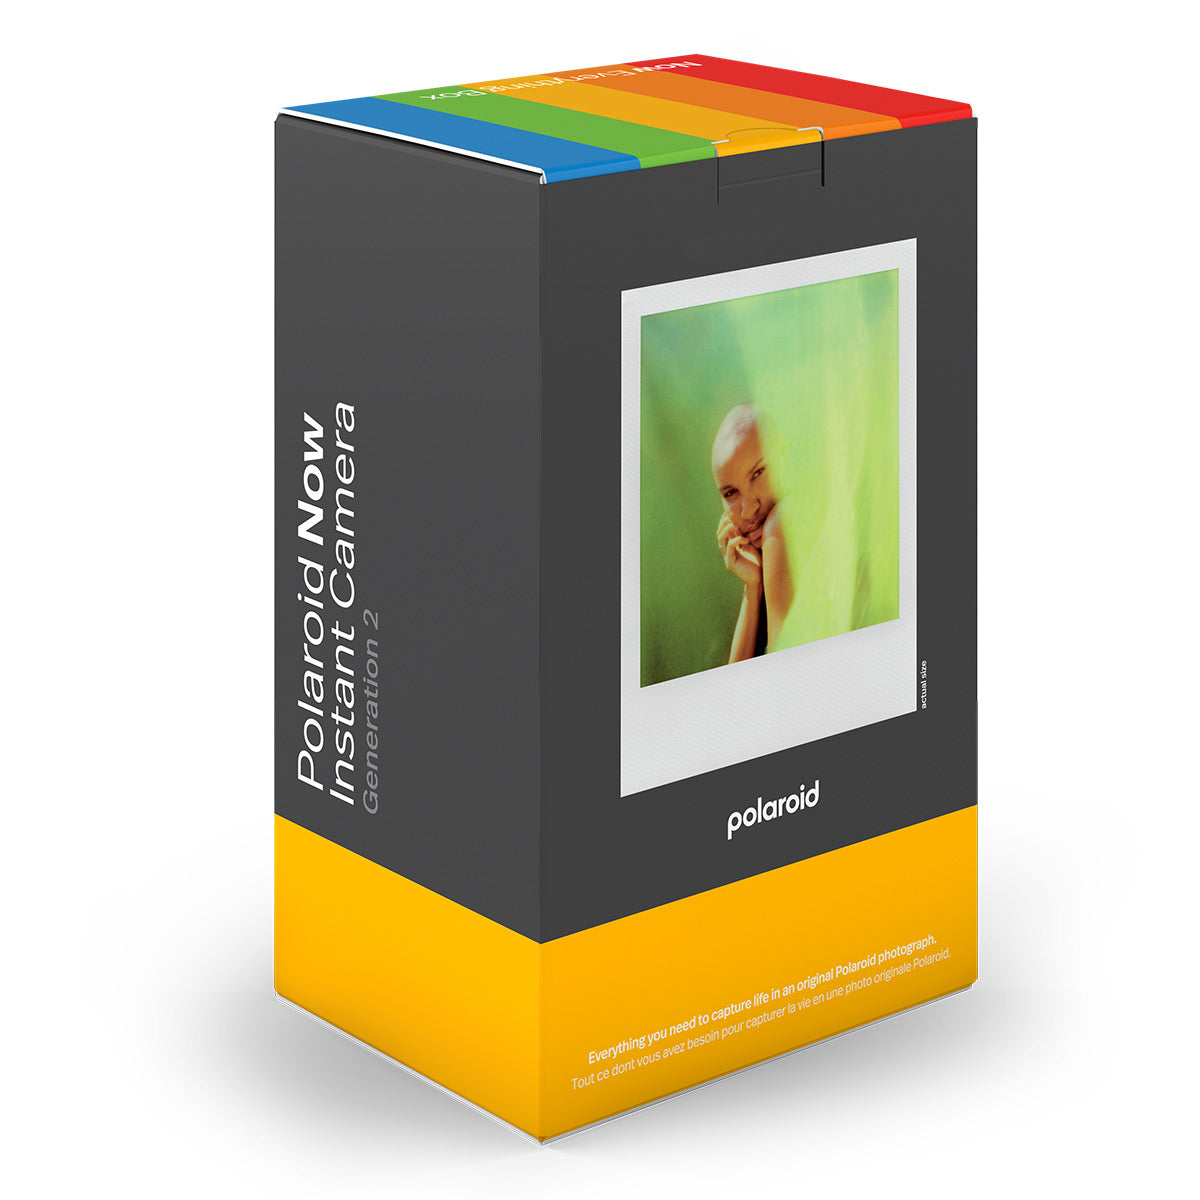 Polaroid 600 Instant Film - DOUBLE Pack - 1x Color film 1x B&W film